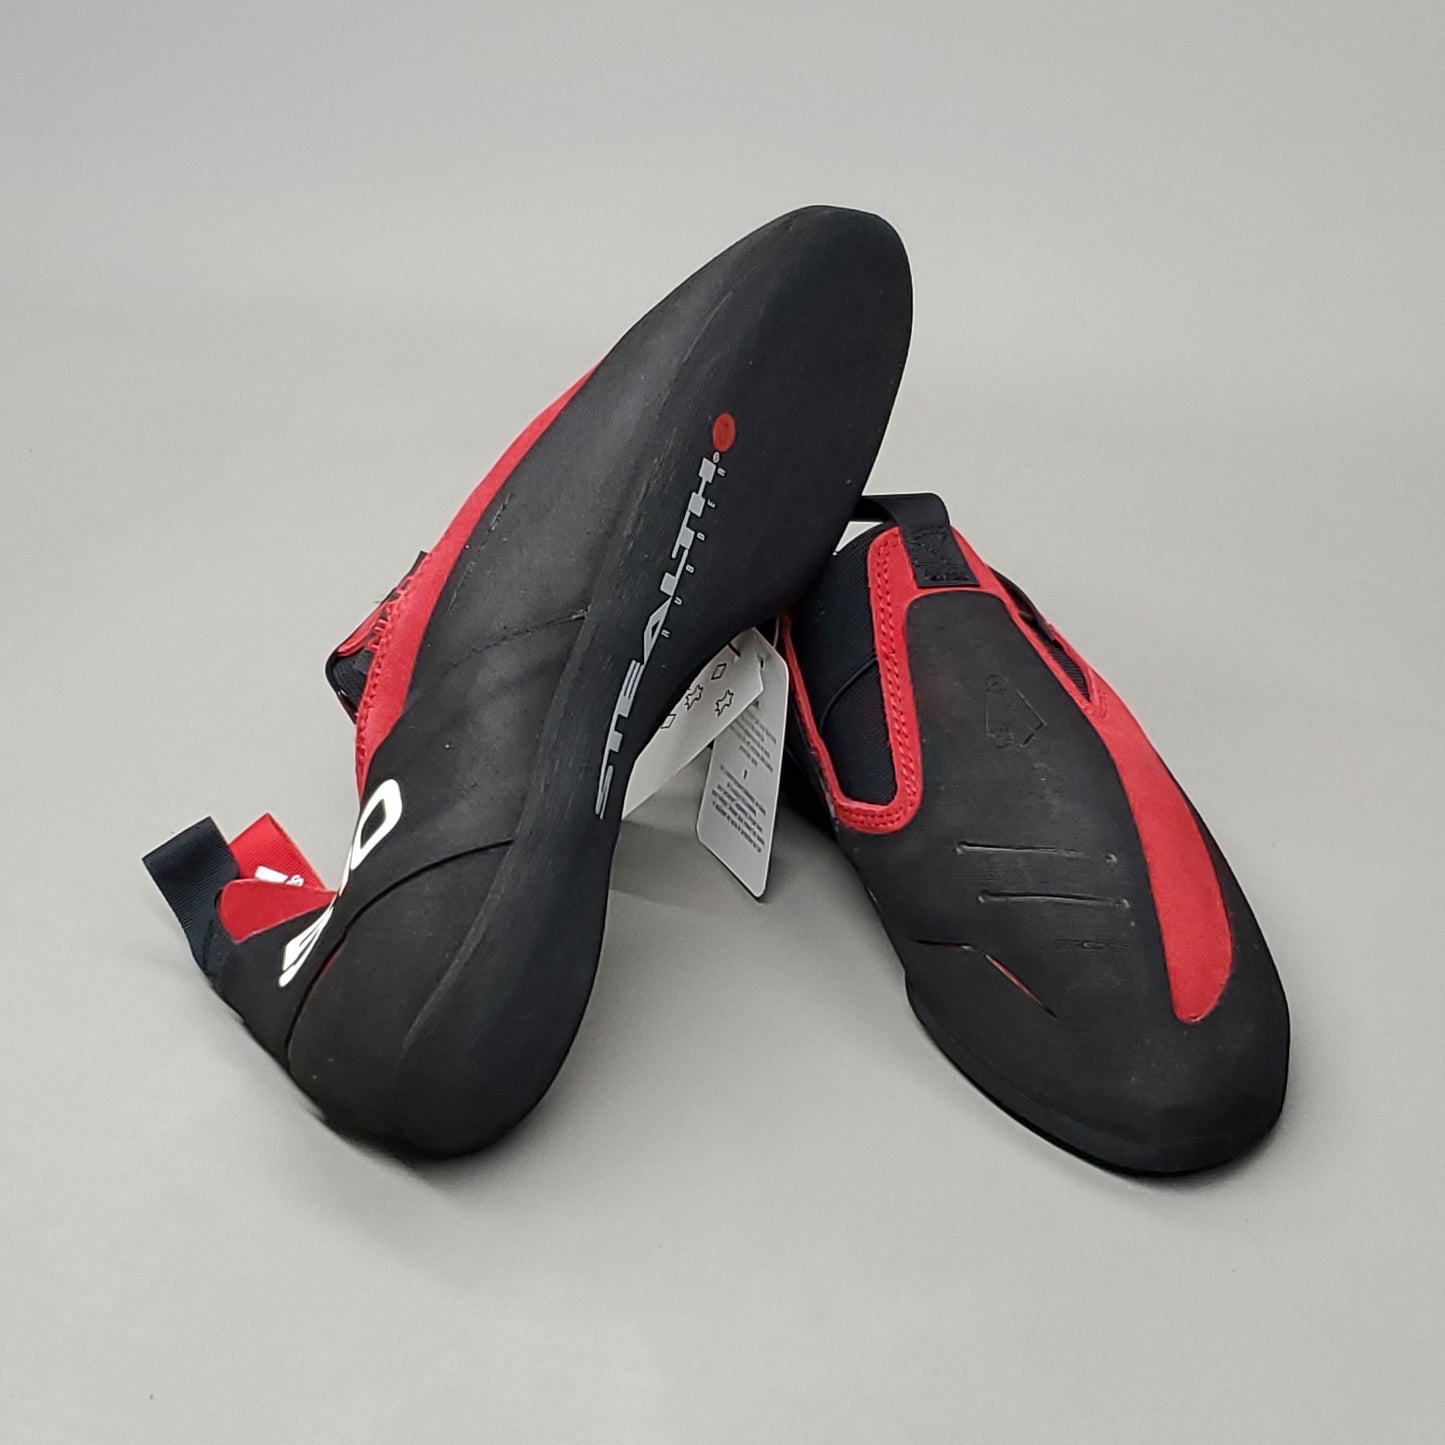 ADIDAS Five Ten Niad Moccasym Slip On Climbing Shoes Men's Sz 5 Black/Red FW2853 (New)